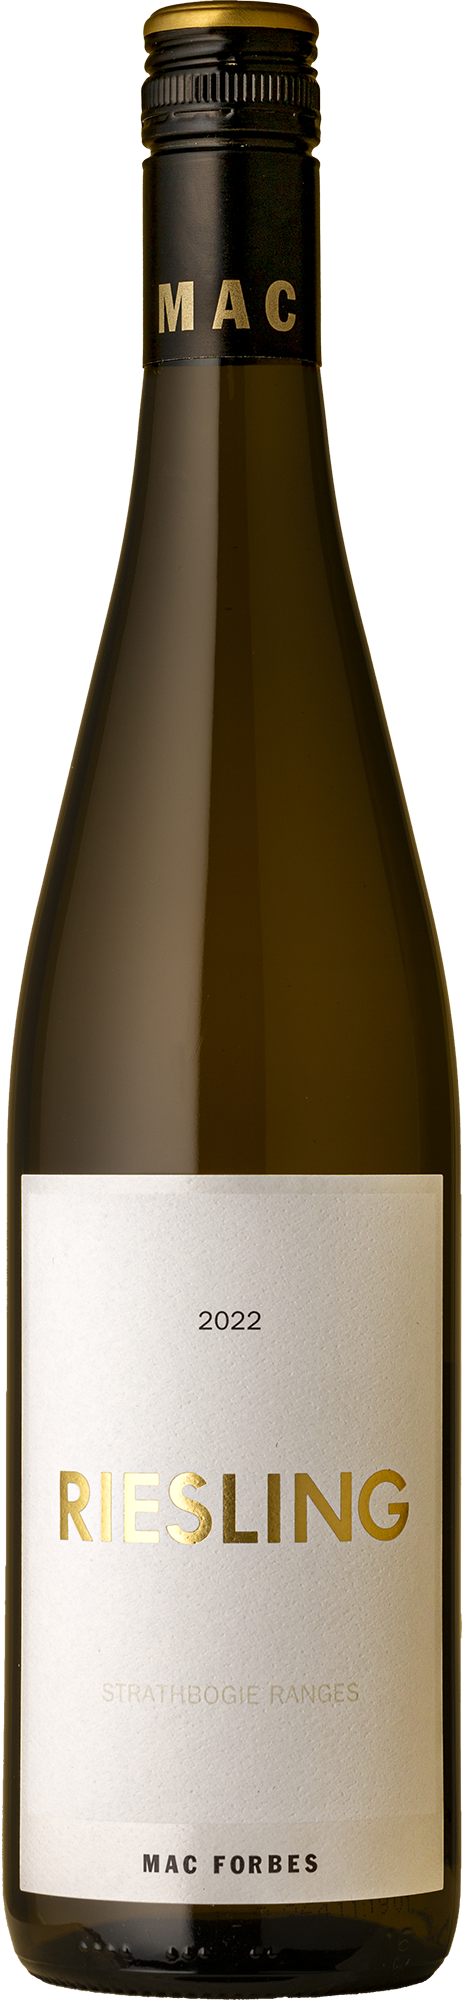 Mac Forbes - Strathbogie Riesling 2022 White Wine